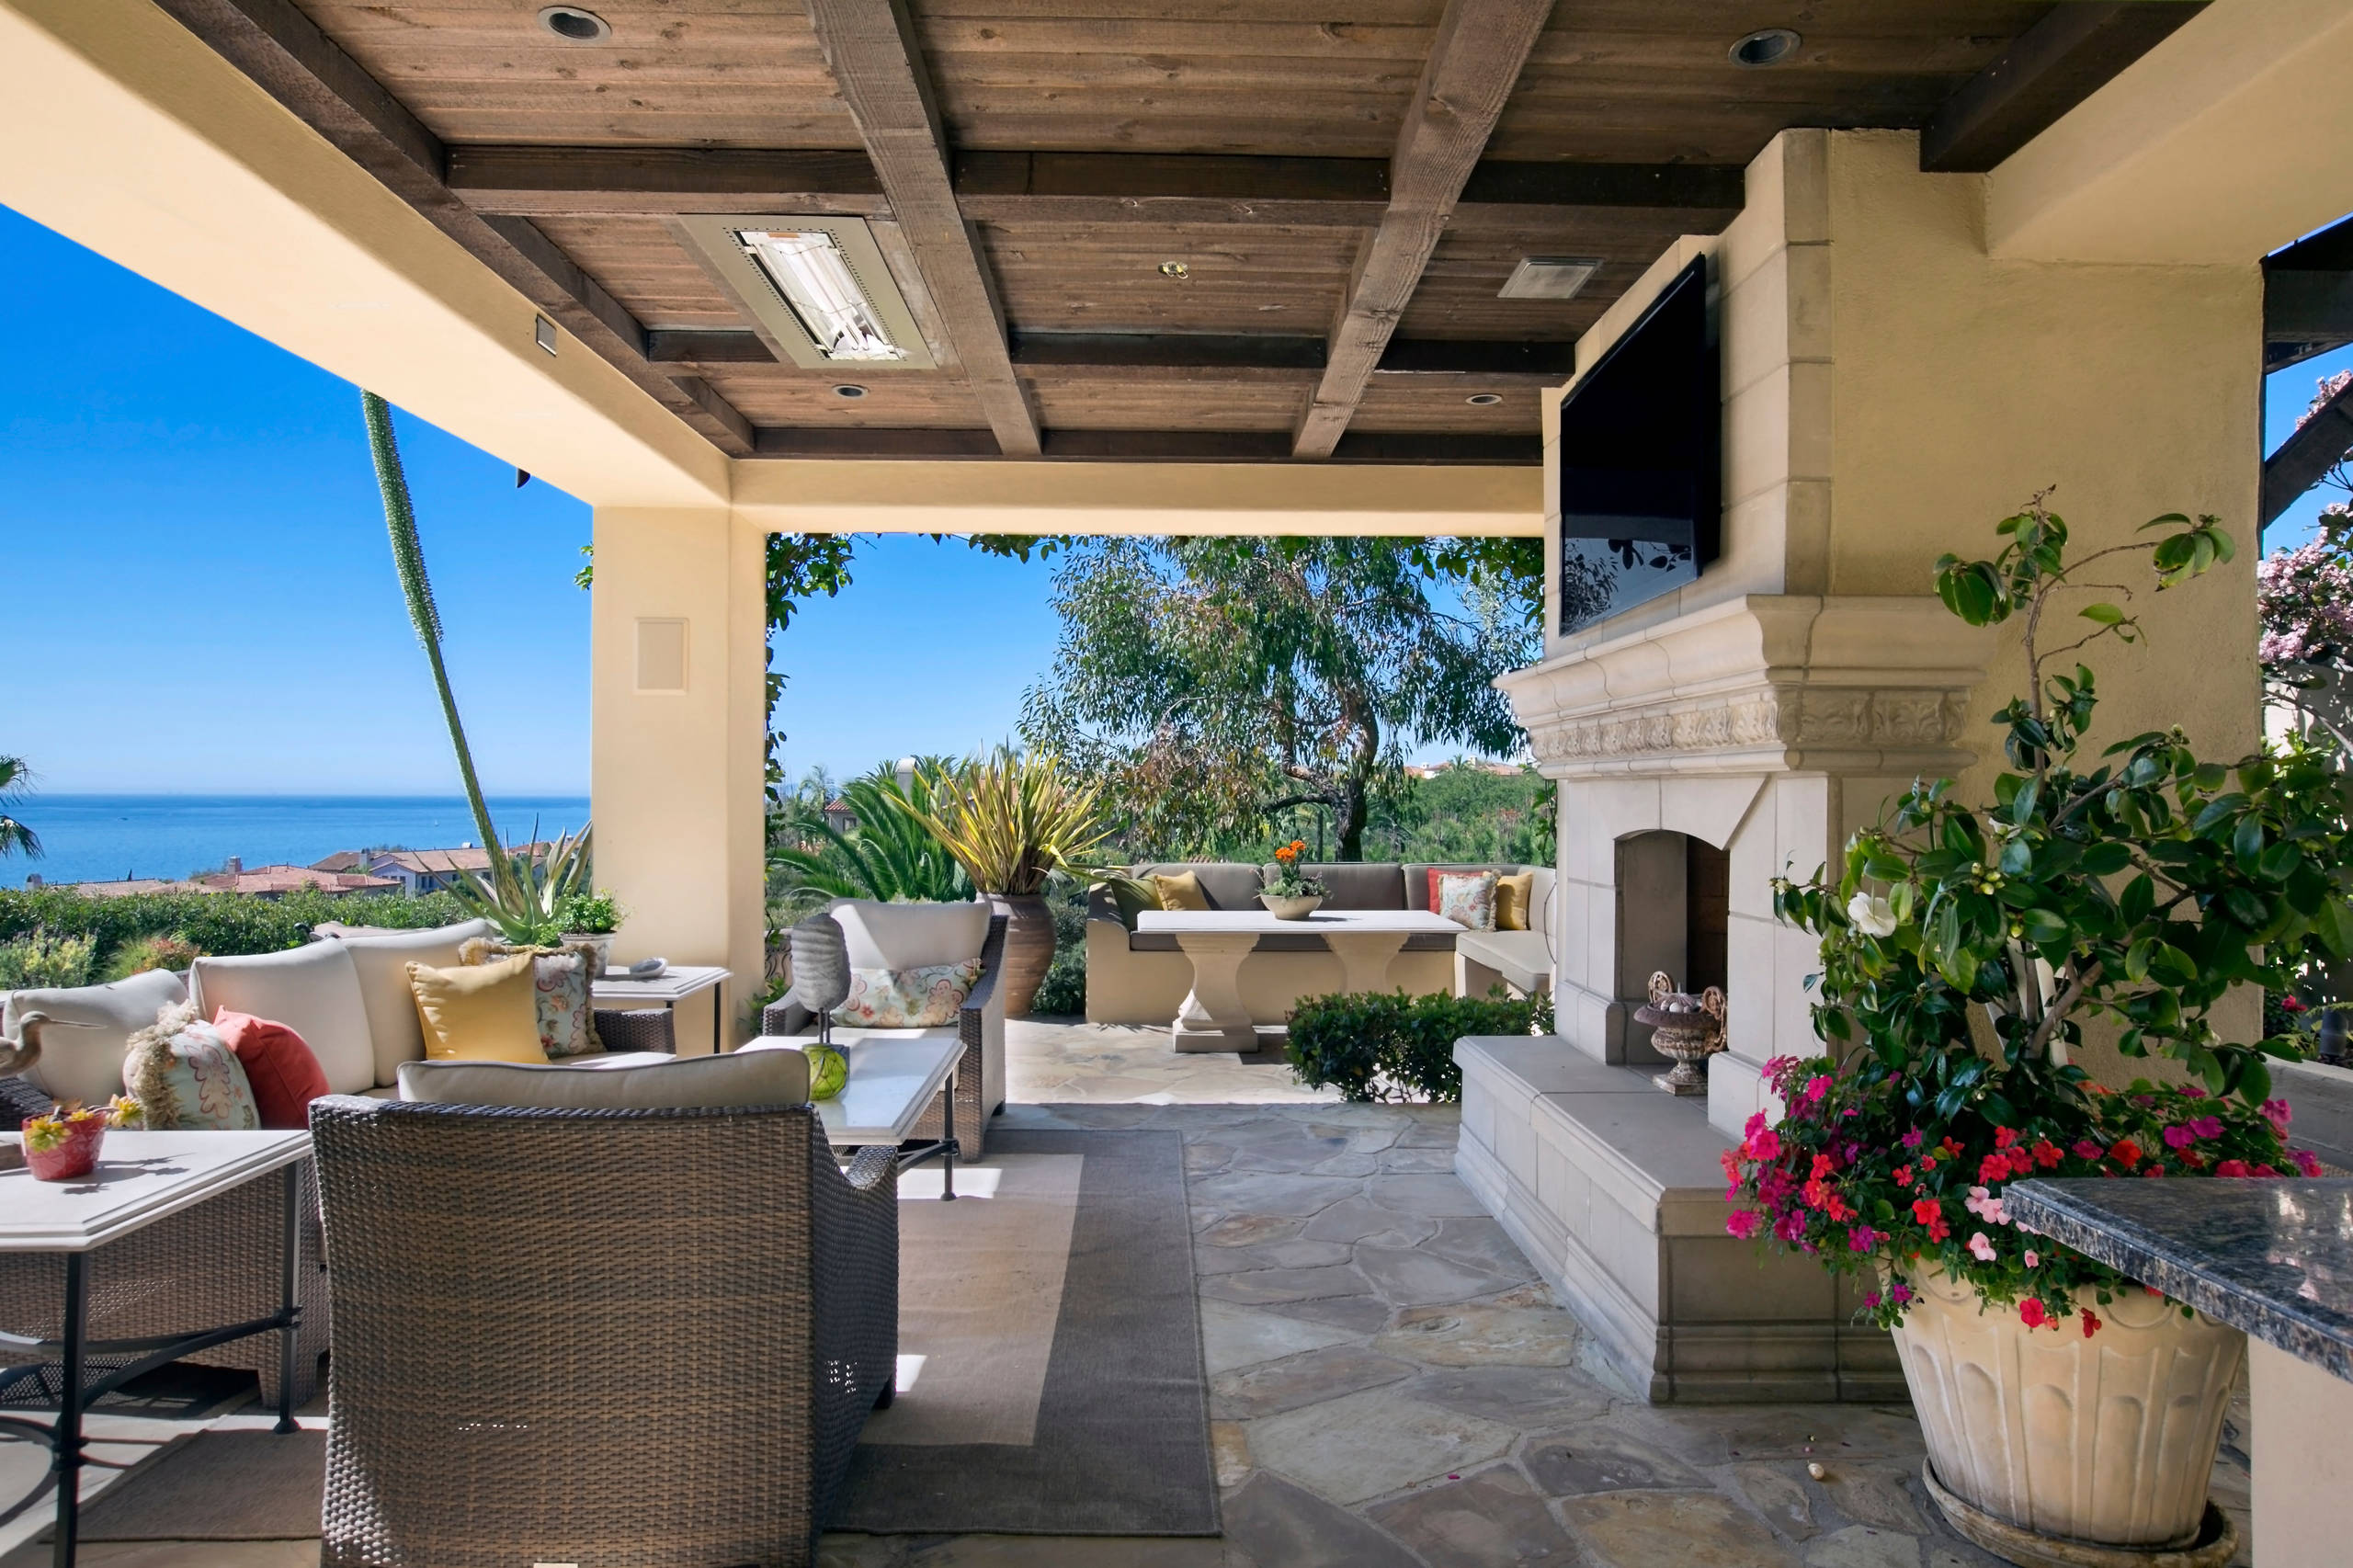 16 Beautiful Mediterranean Patio Designs That Will ...